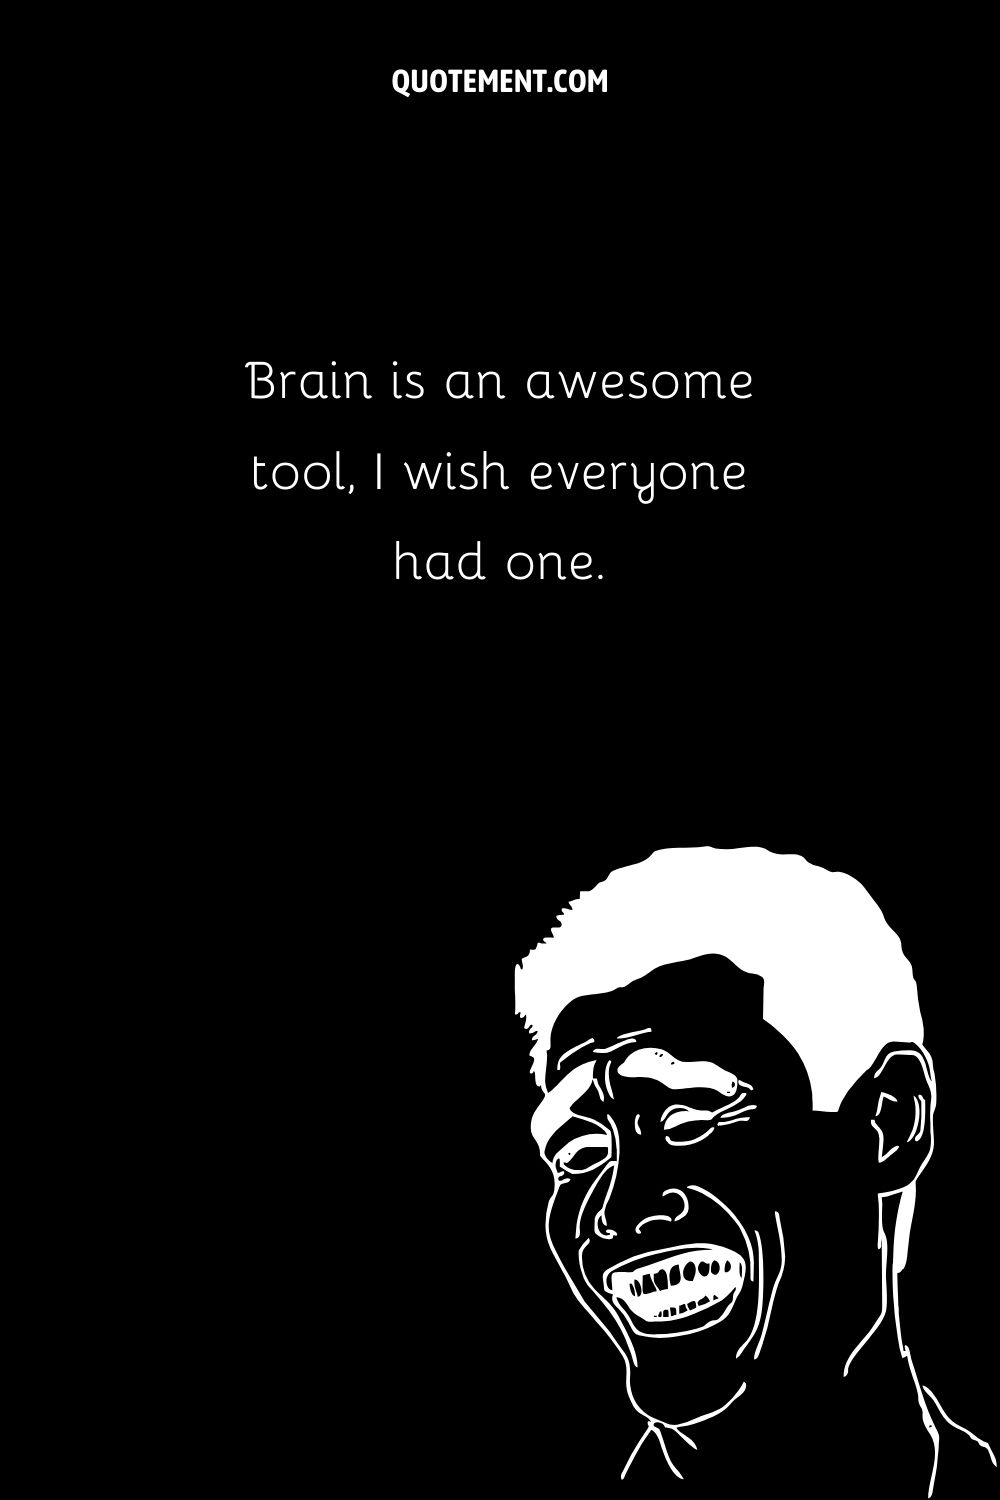 Brain is an awesome tool, I wish everyone had one.